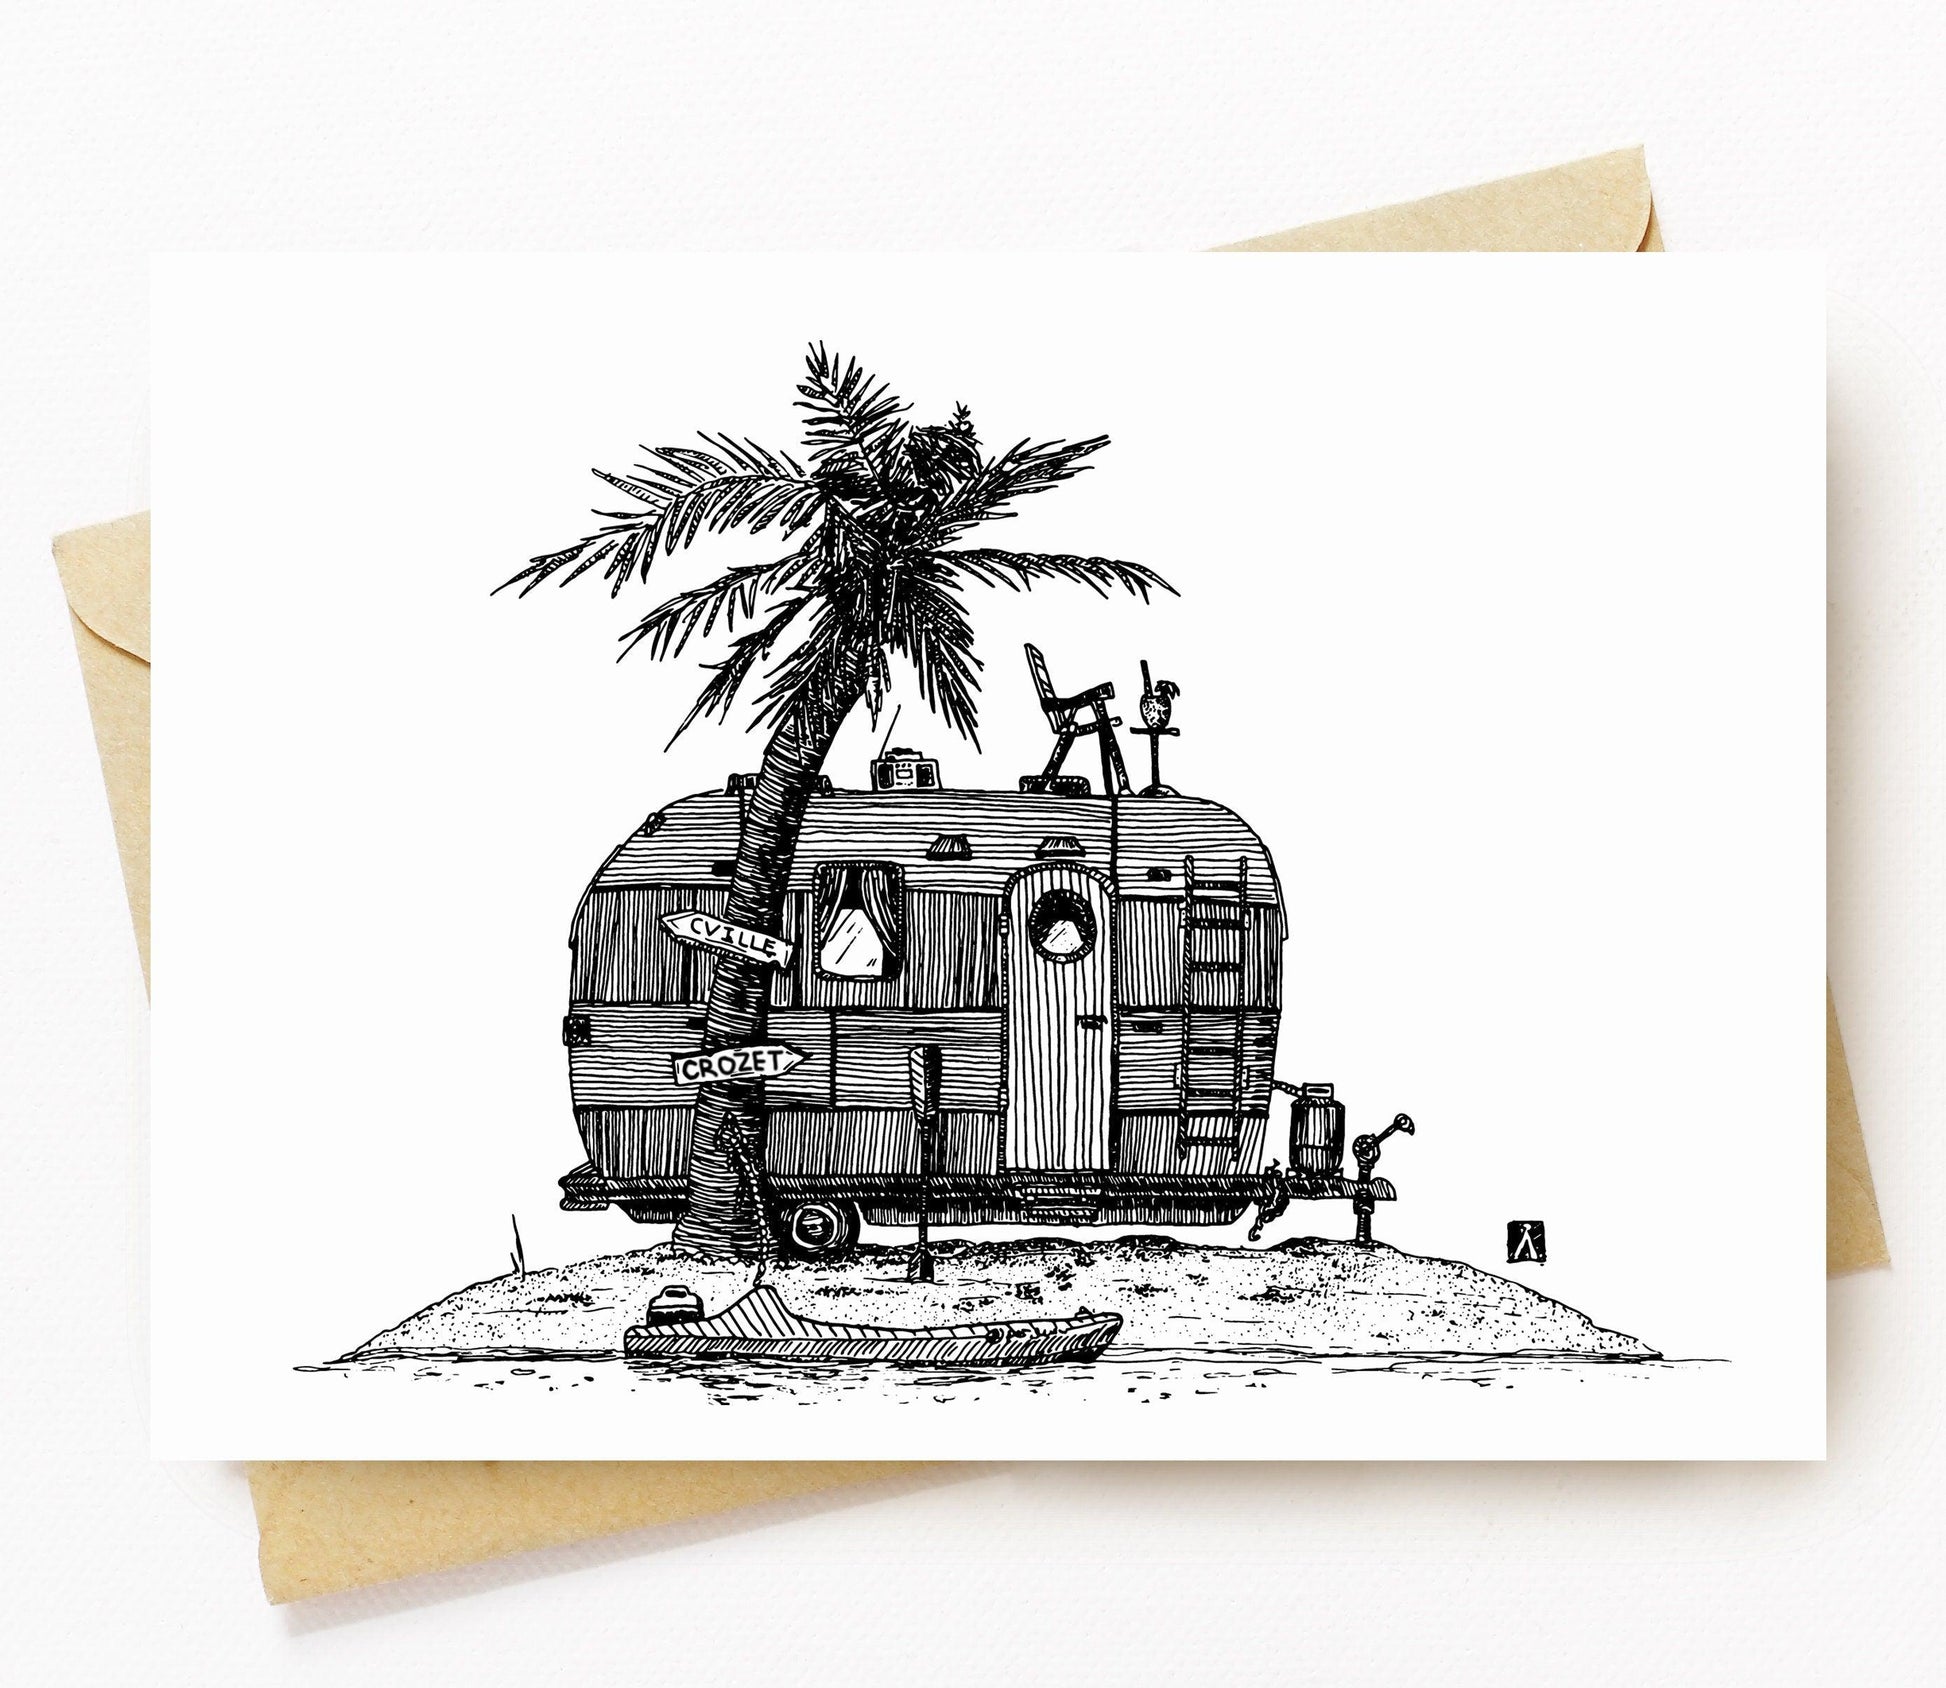 BellavanceInk: Greeting Card With Pen & Ink Drawing of Vintage Trailer On An Deserted Island 5 x 7 Inches - BellavanceInk